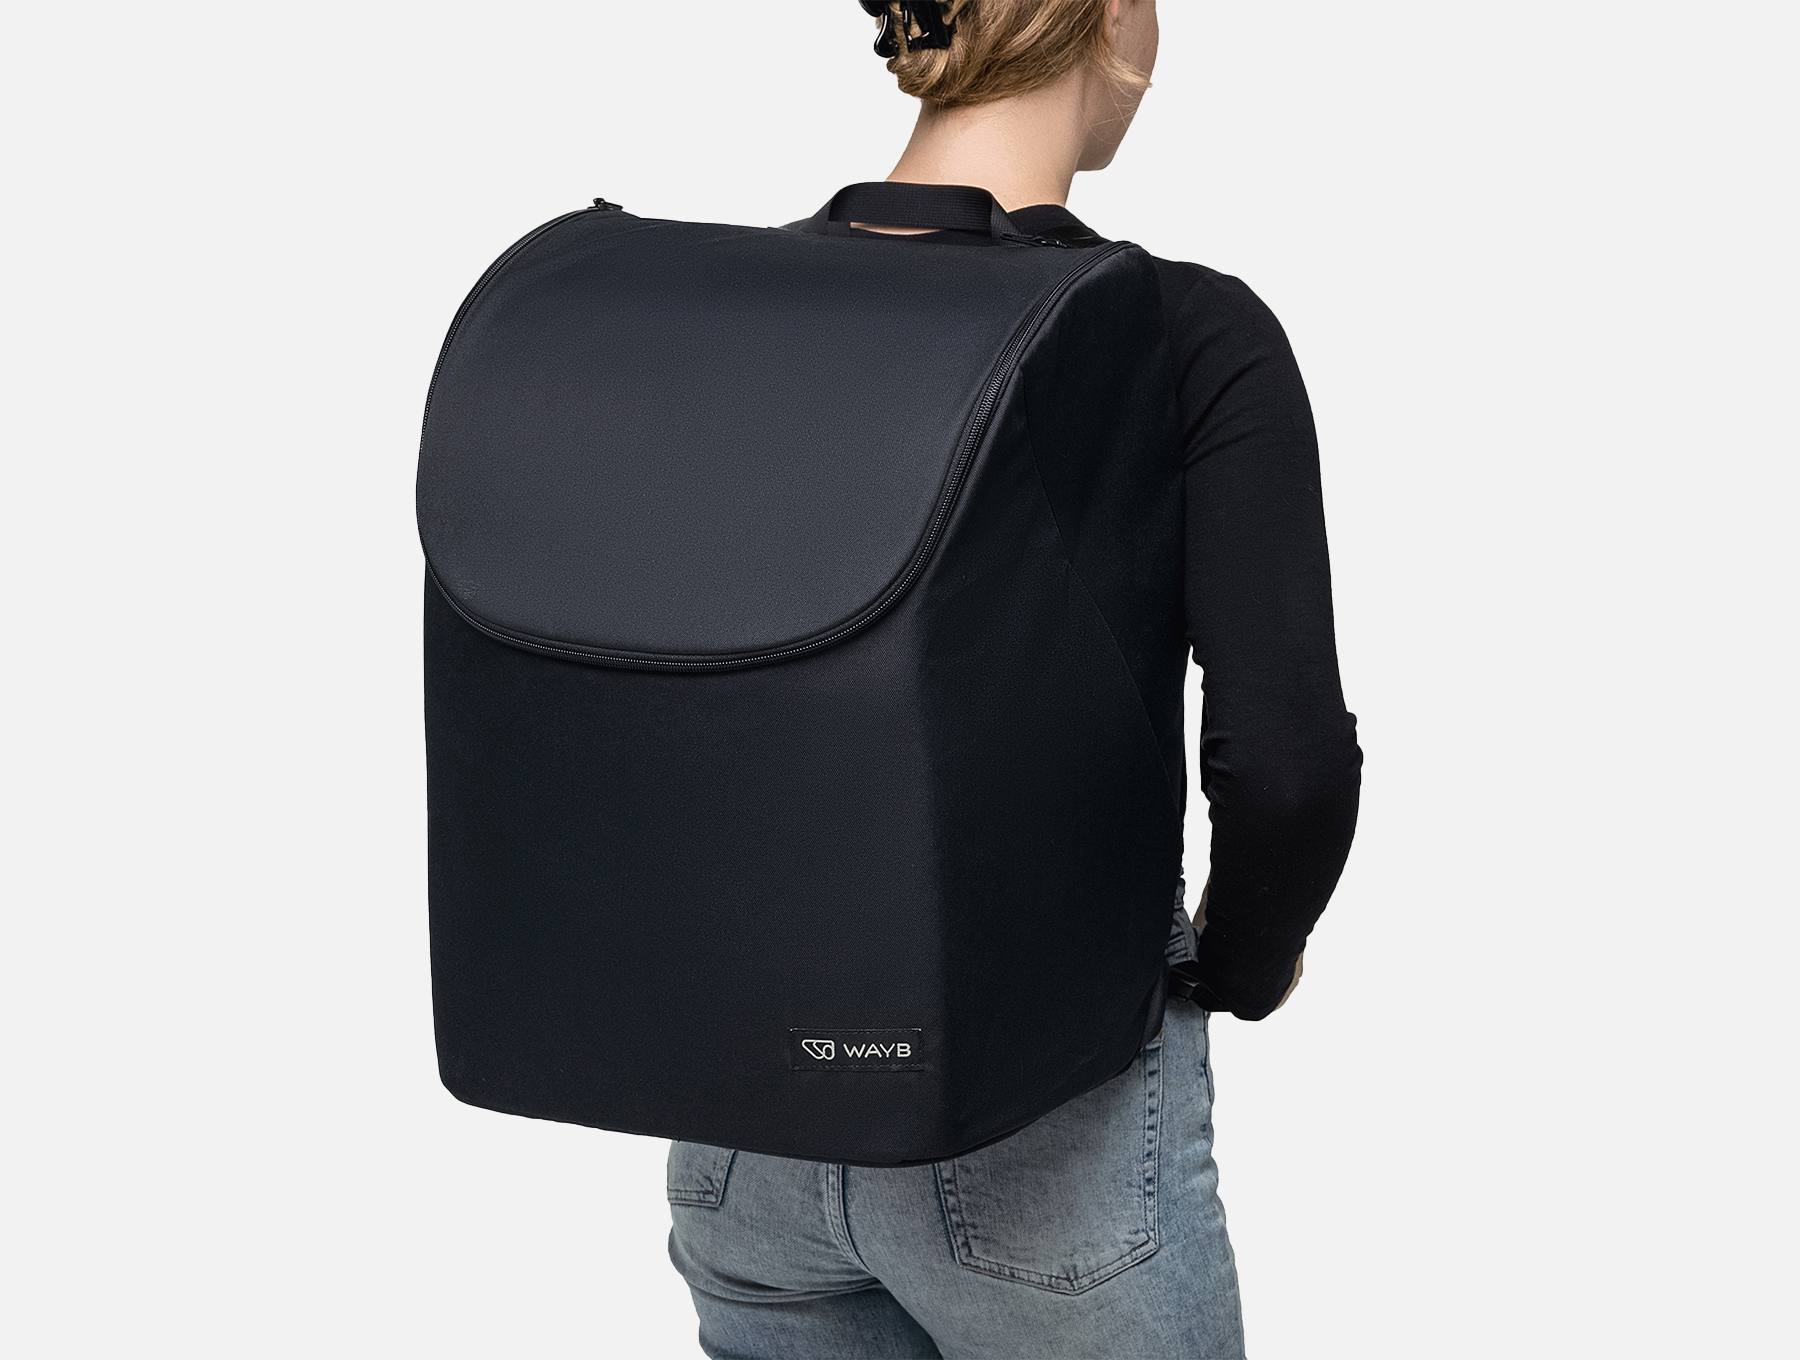 Backpack - Wayb Pico Forward Facing Travel Car Seat Travel Bag